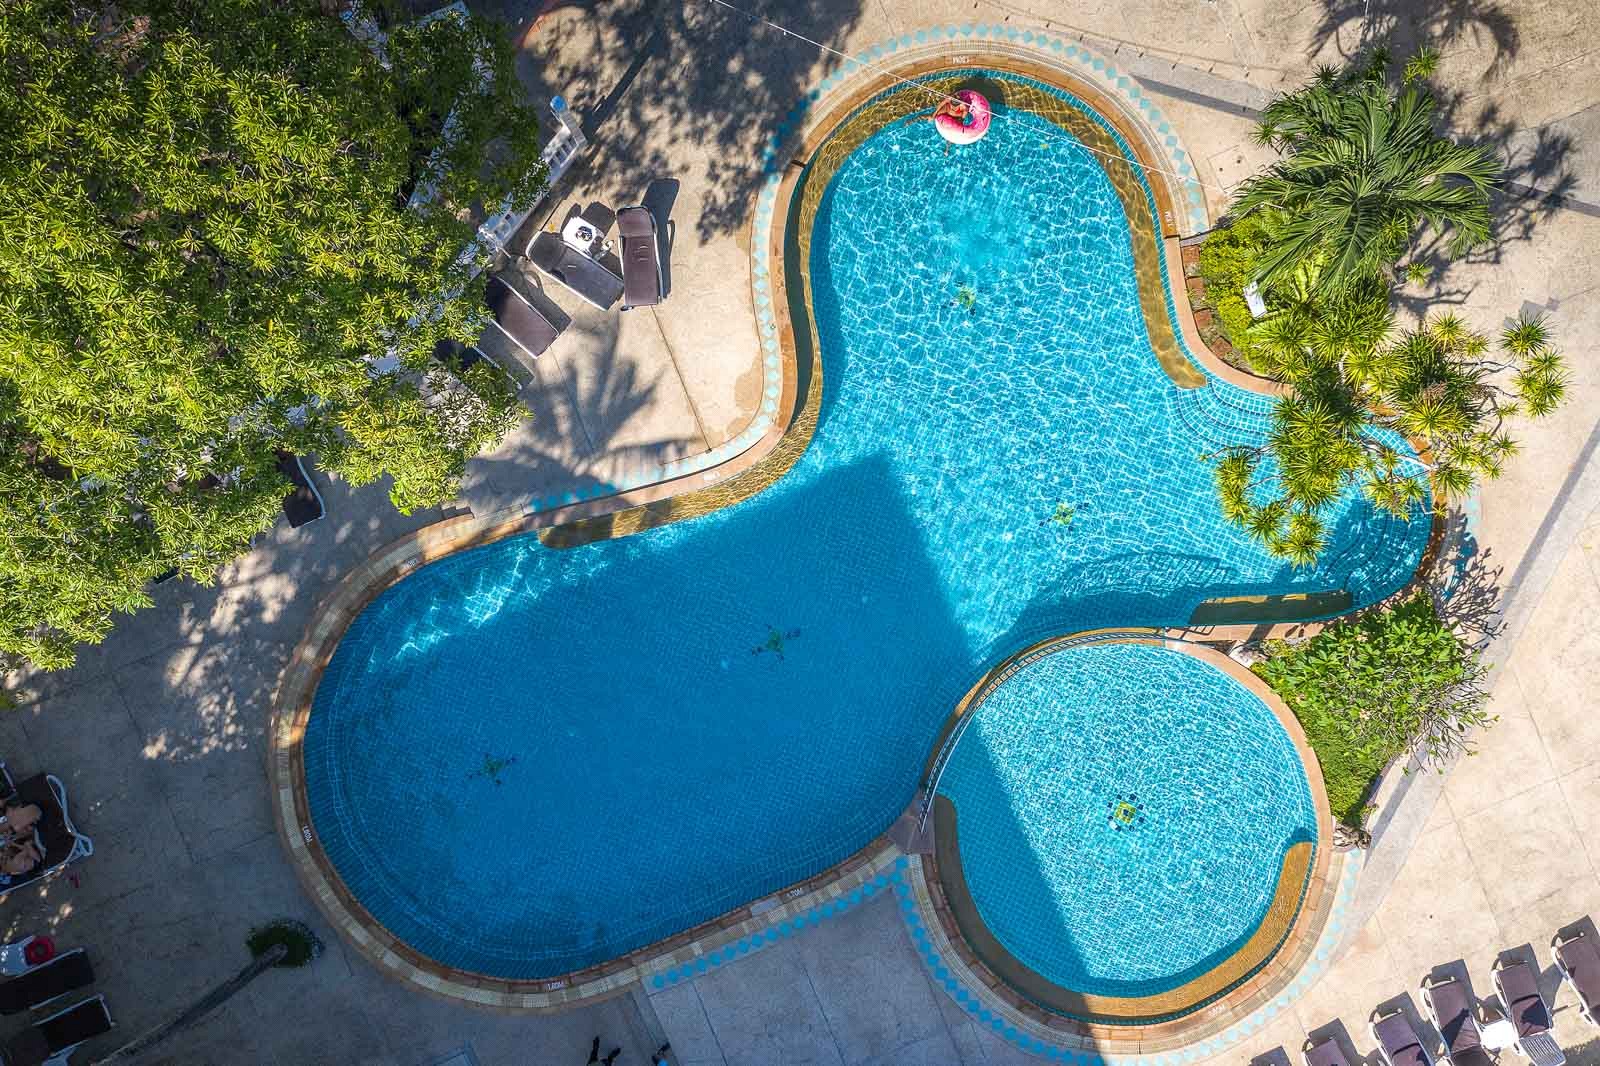 Patong Lodge Hotel Phuket